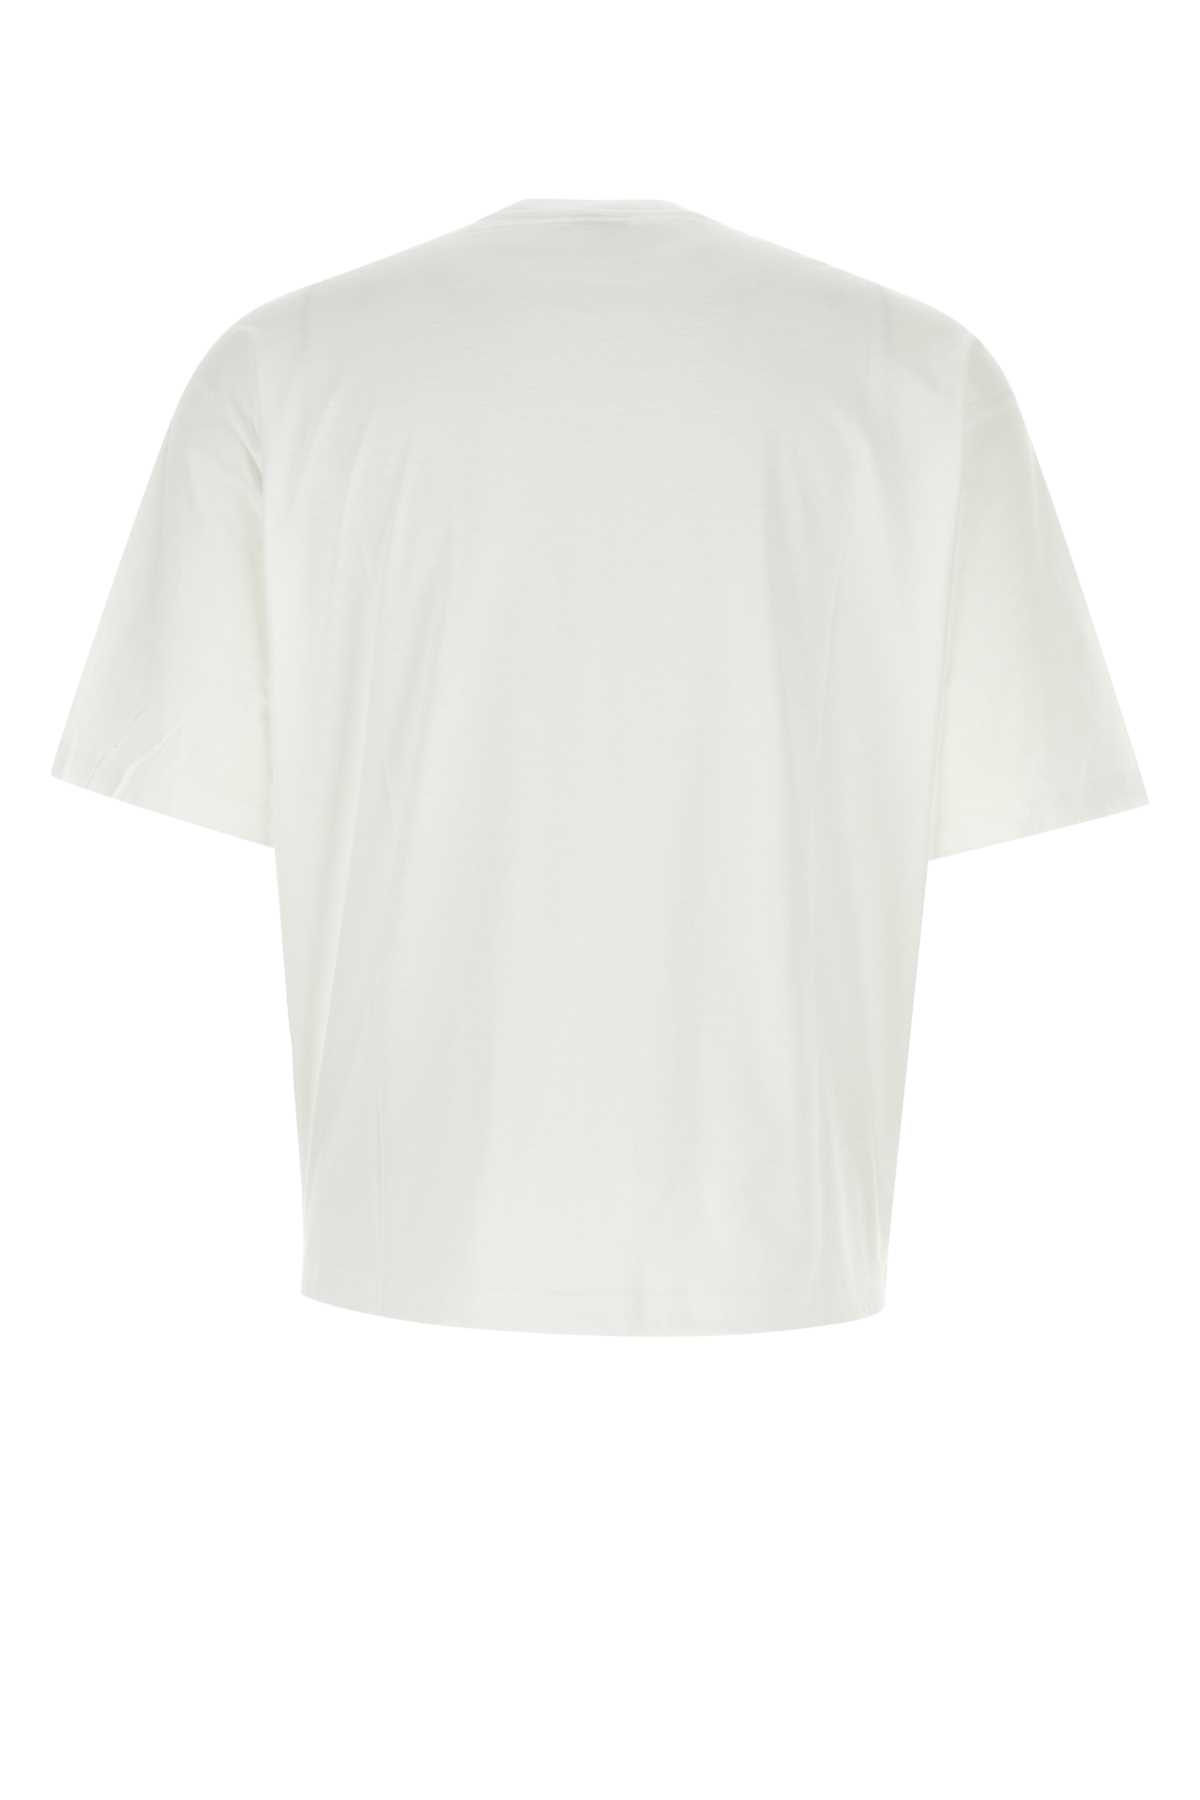 Lanvin White Cotton Oversize T-shirt In Opticwhite